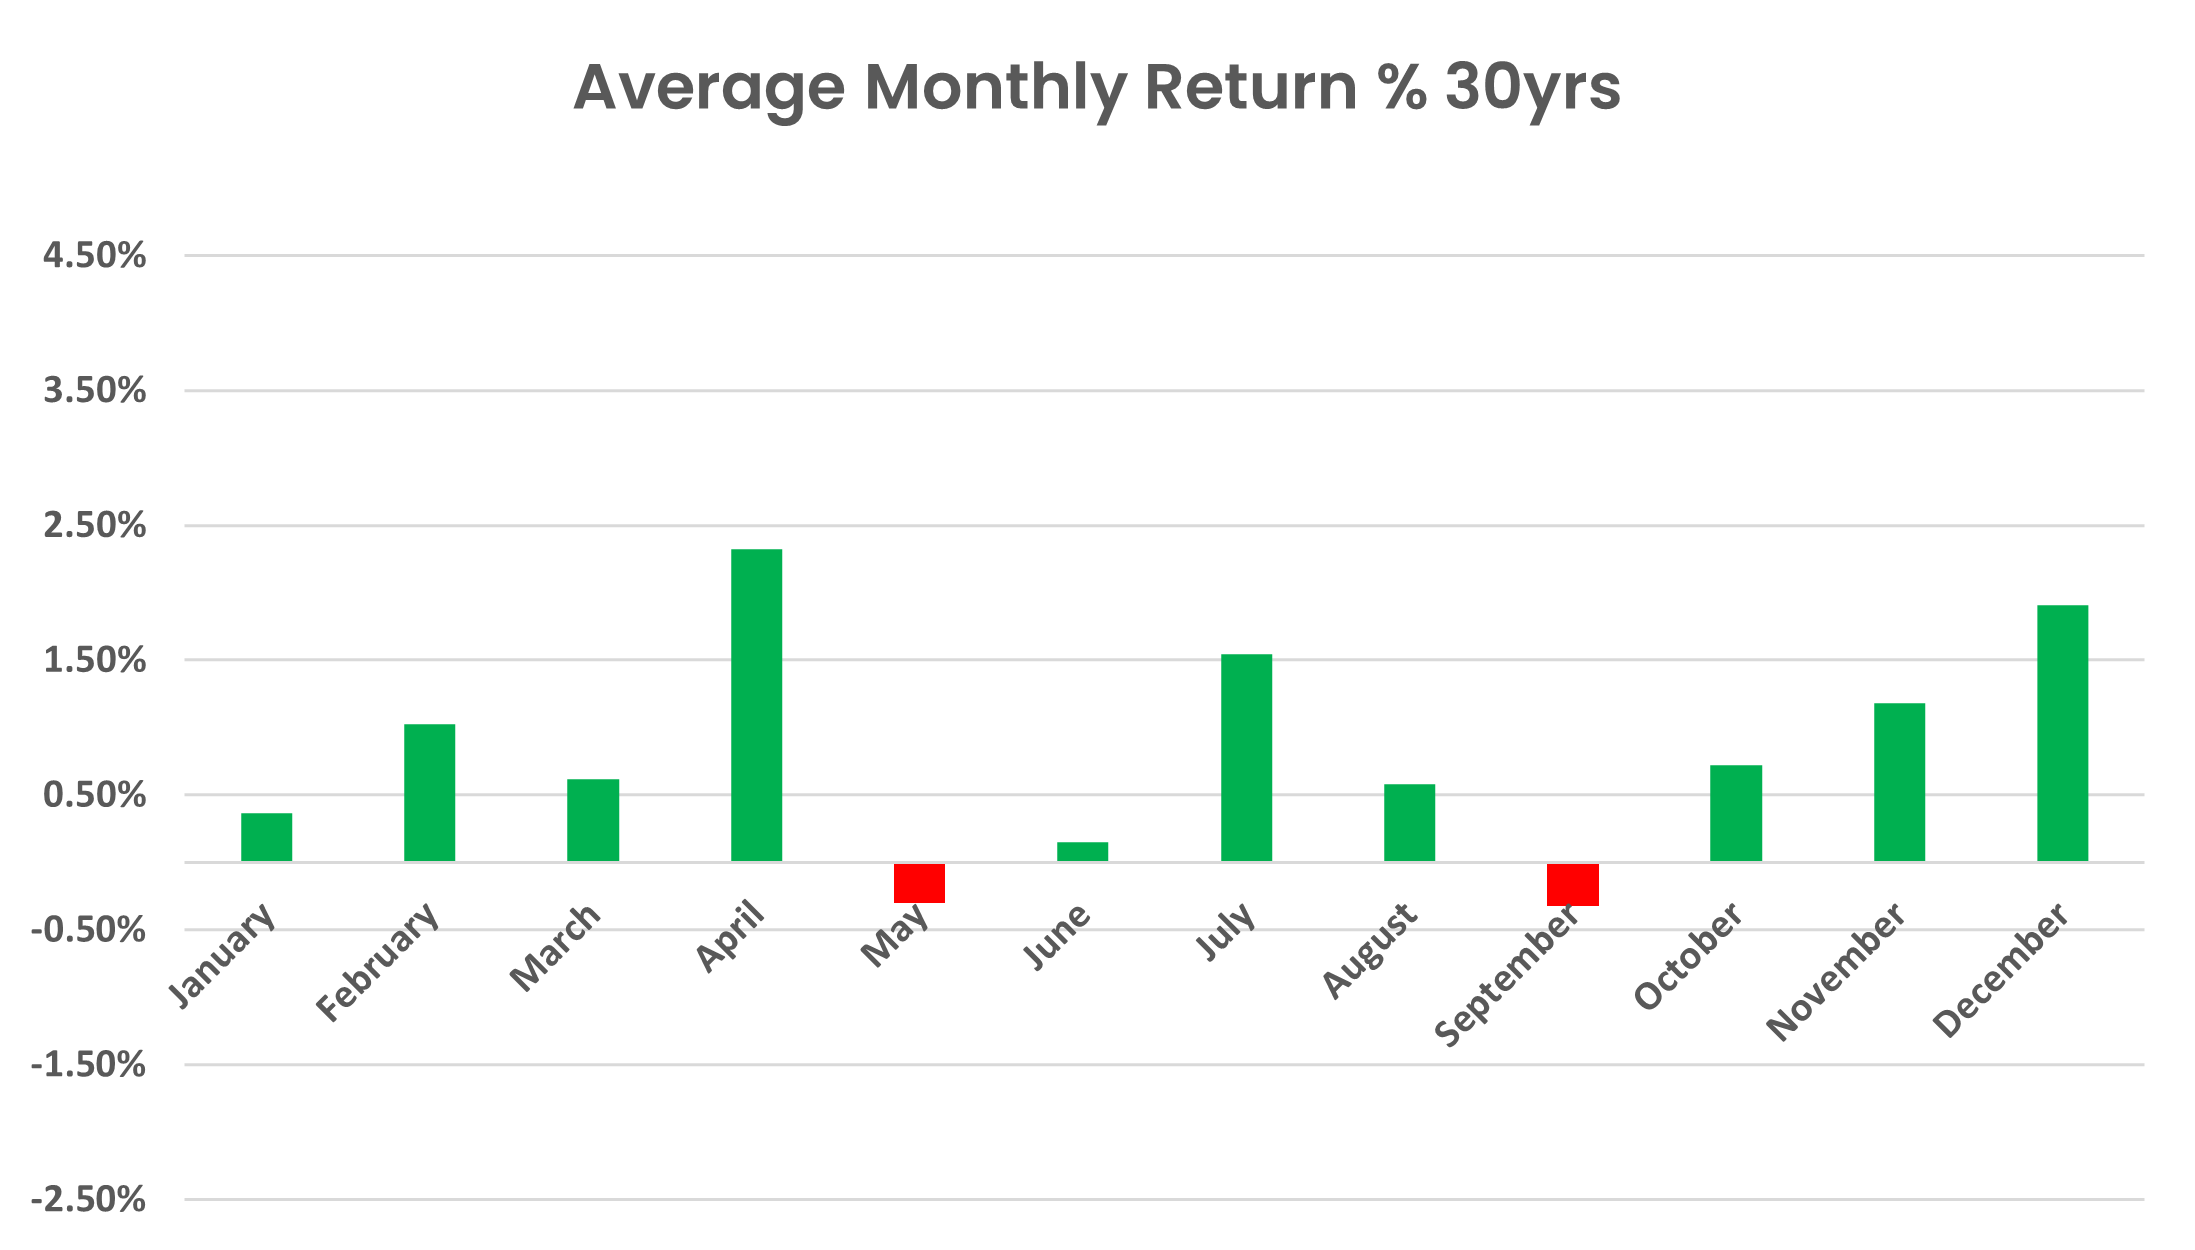 All Ordinaries Total Return Index Seasonality - Monthly Performance 30 years